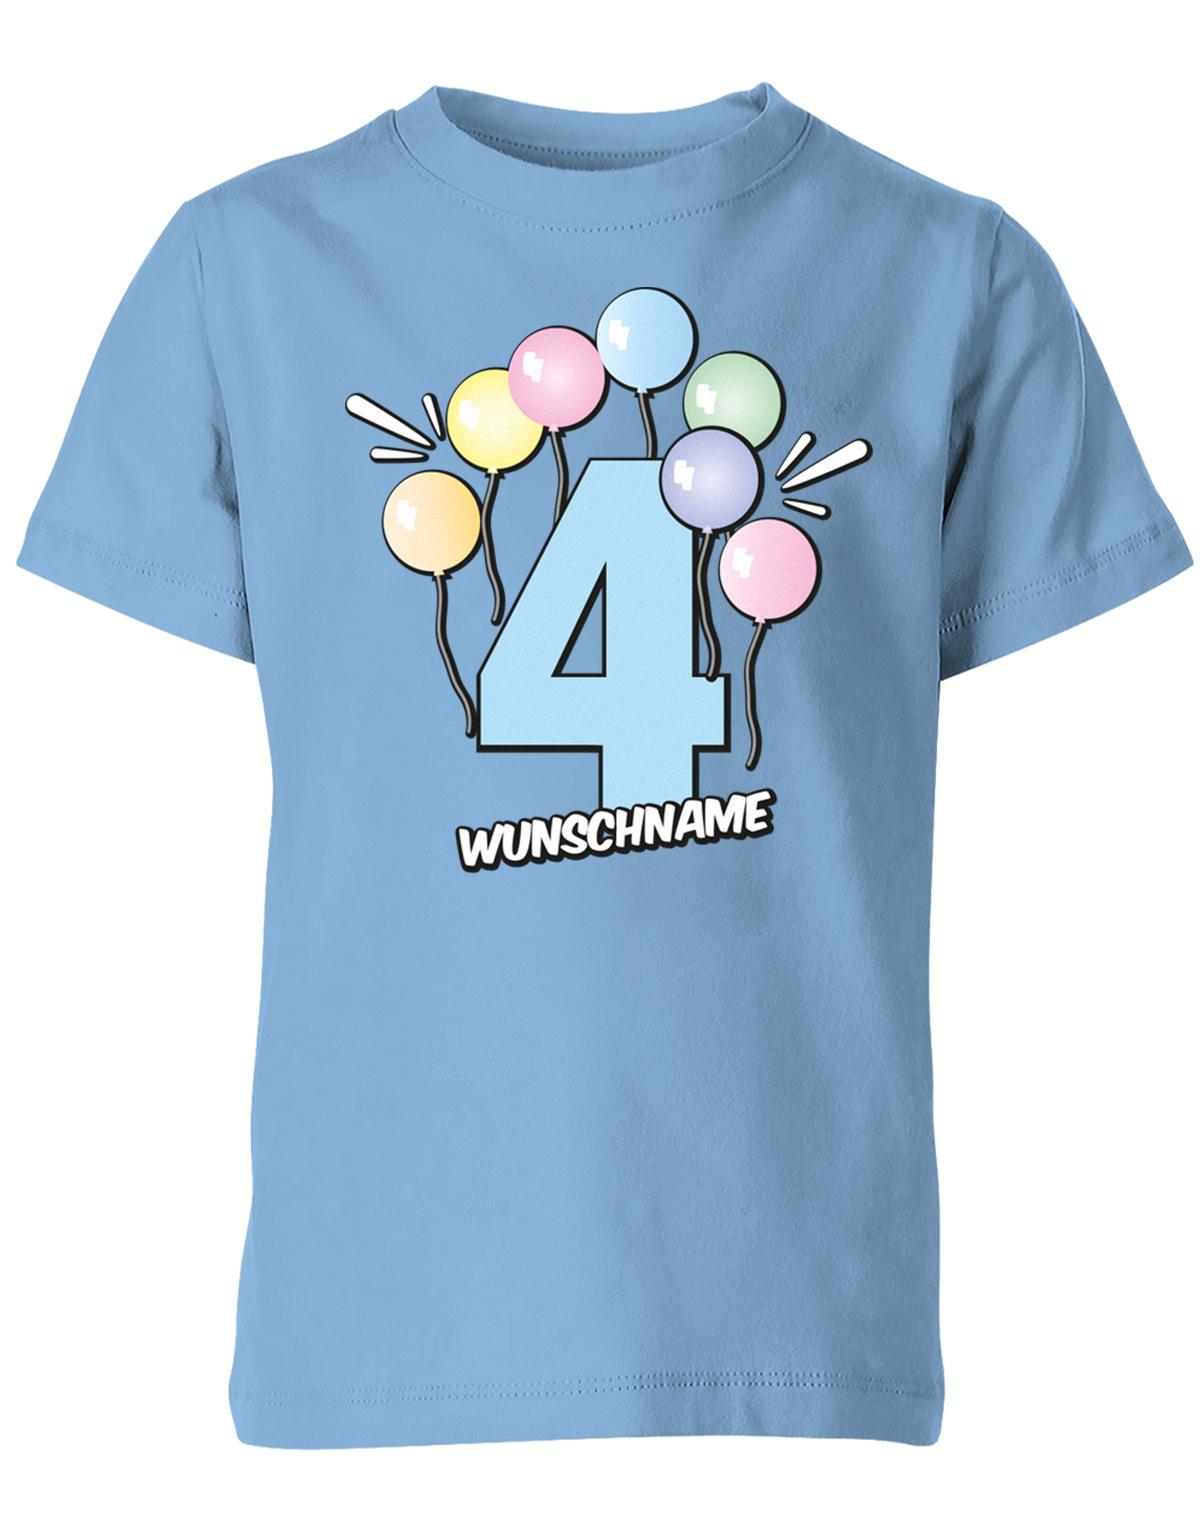 Luftballons-pastell-4-geburtstag-wunschname-kinder-shirt-hellblau